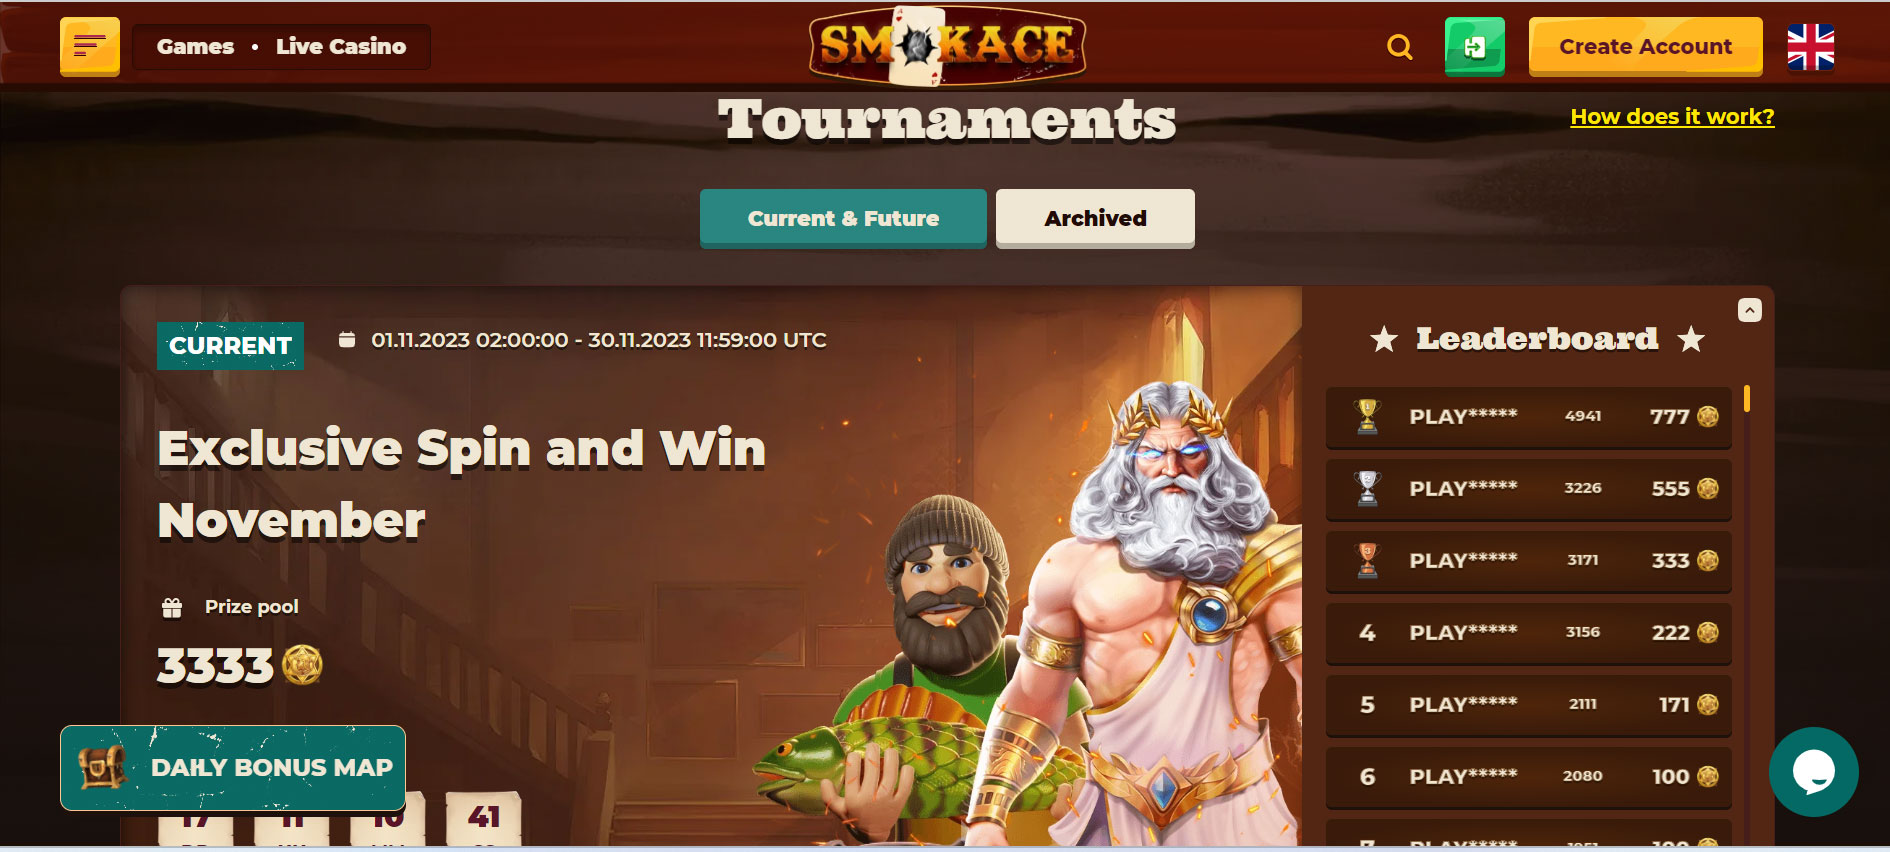 SmokeAce Casino Tournaments